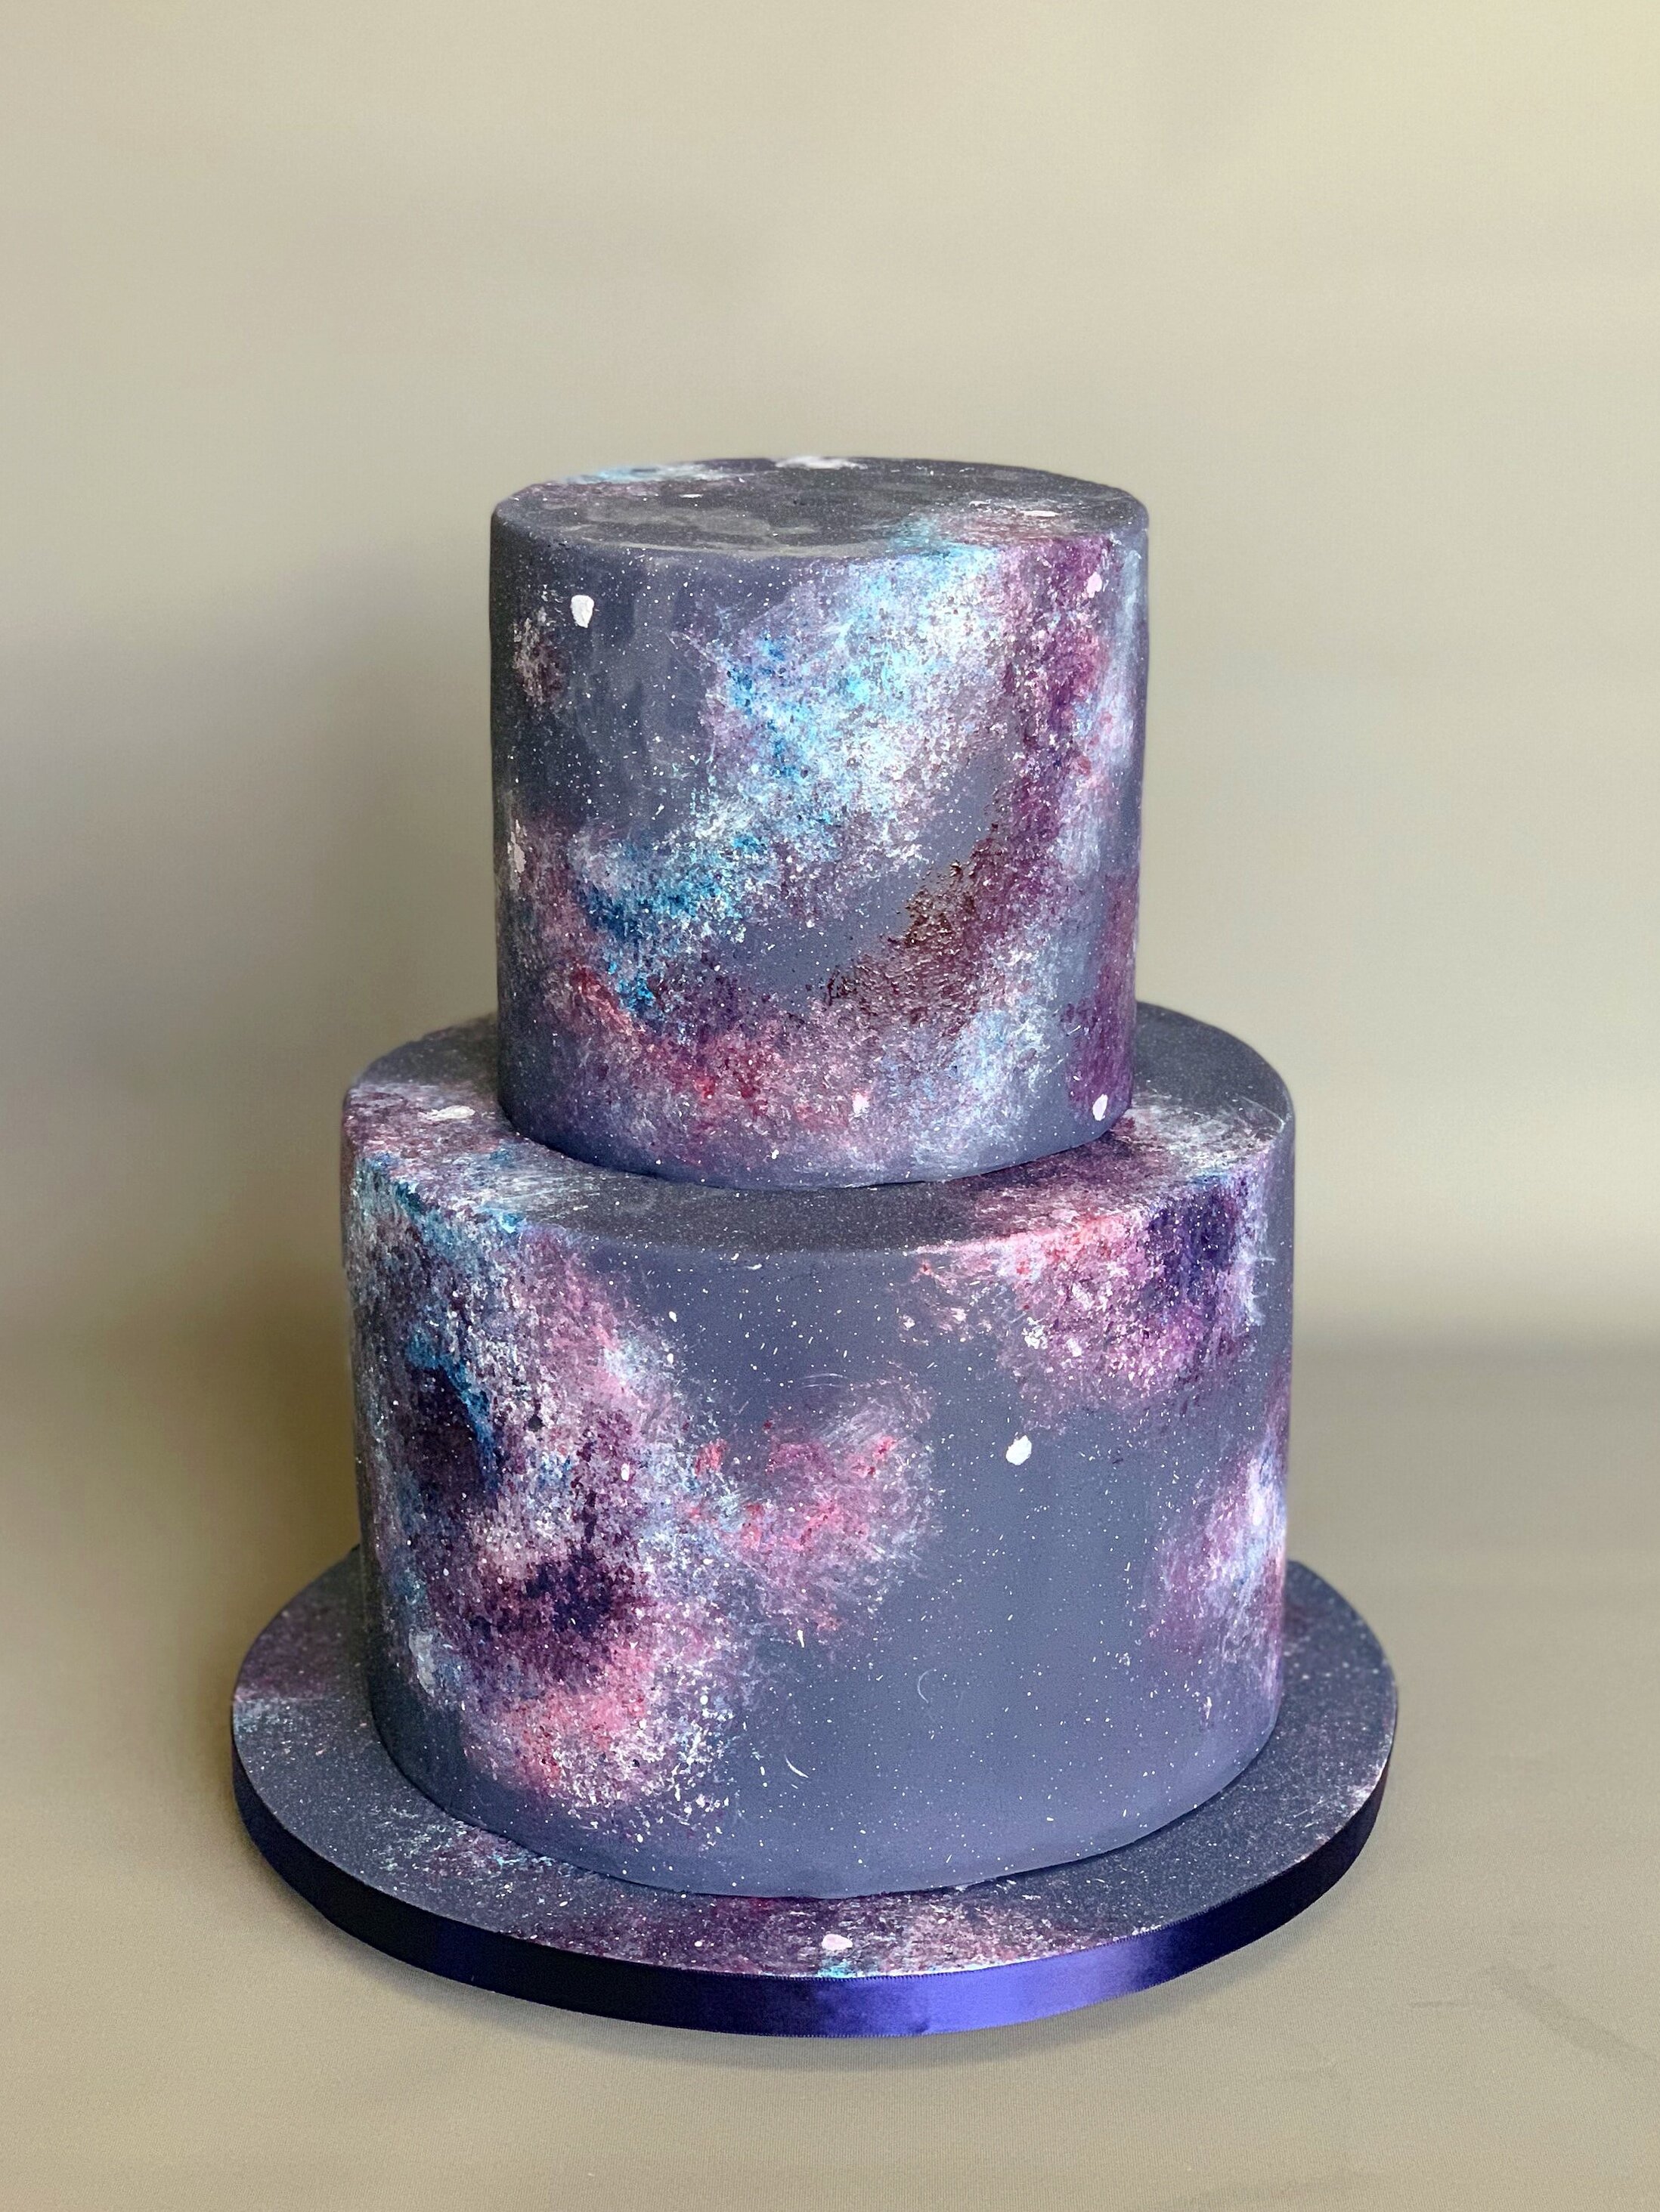 Celebrations — Honey Crumb Cake Studio